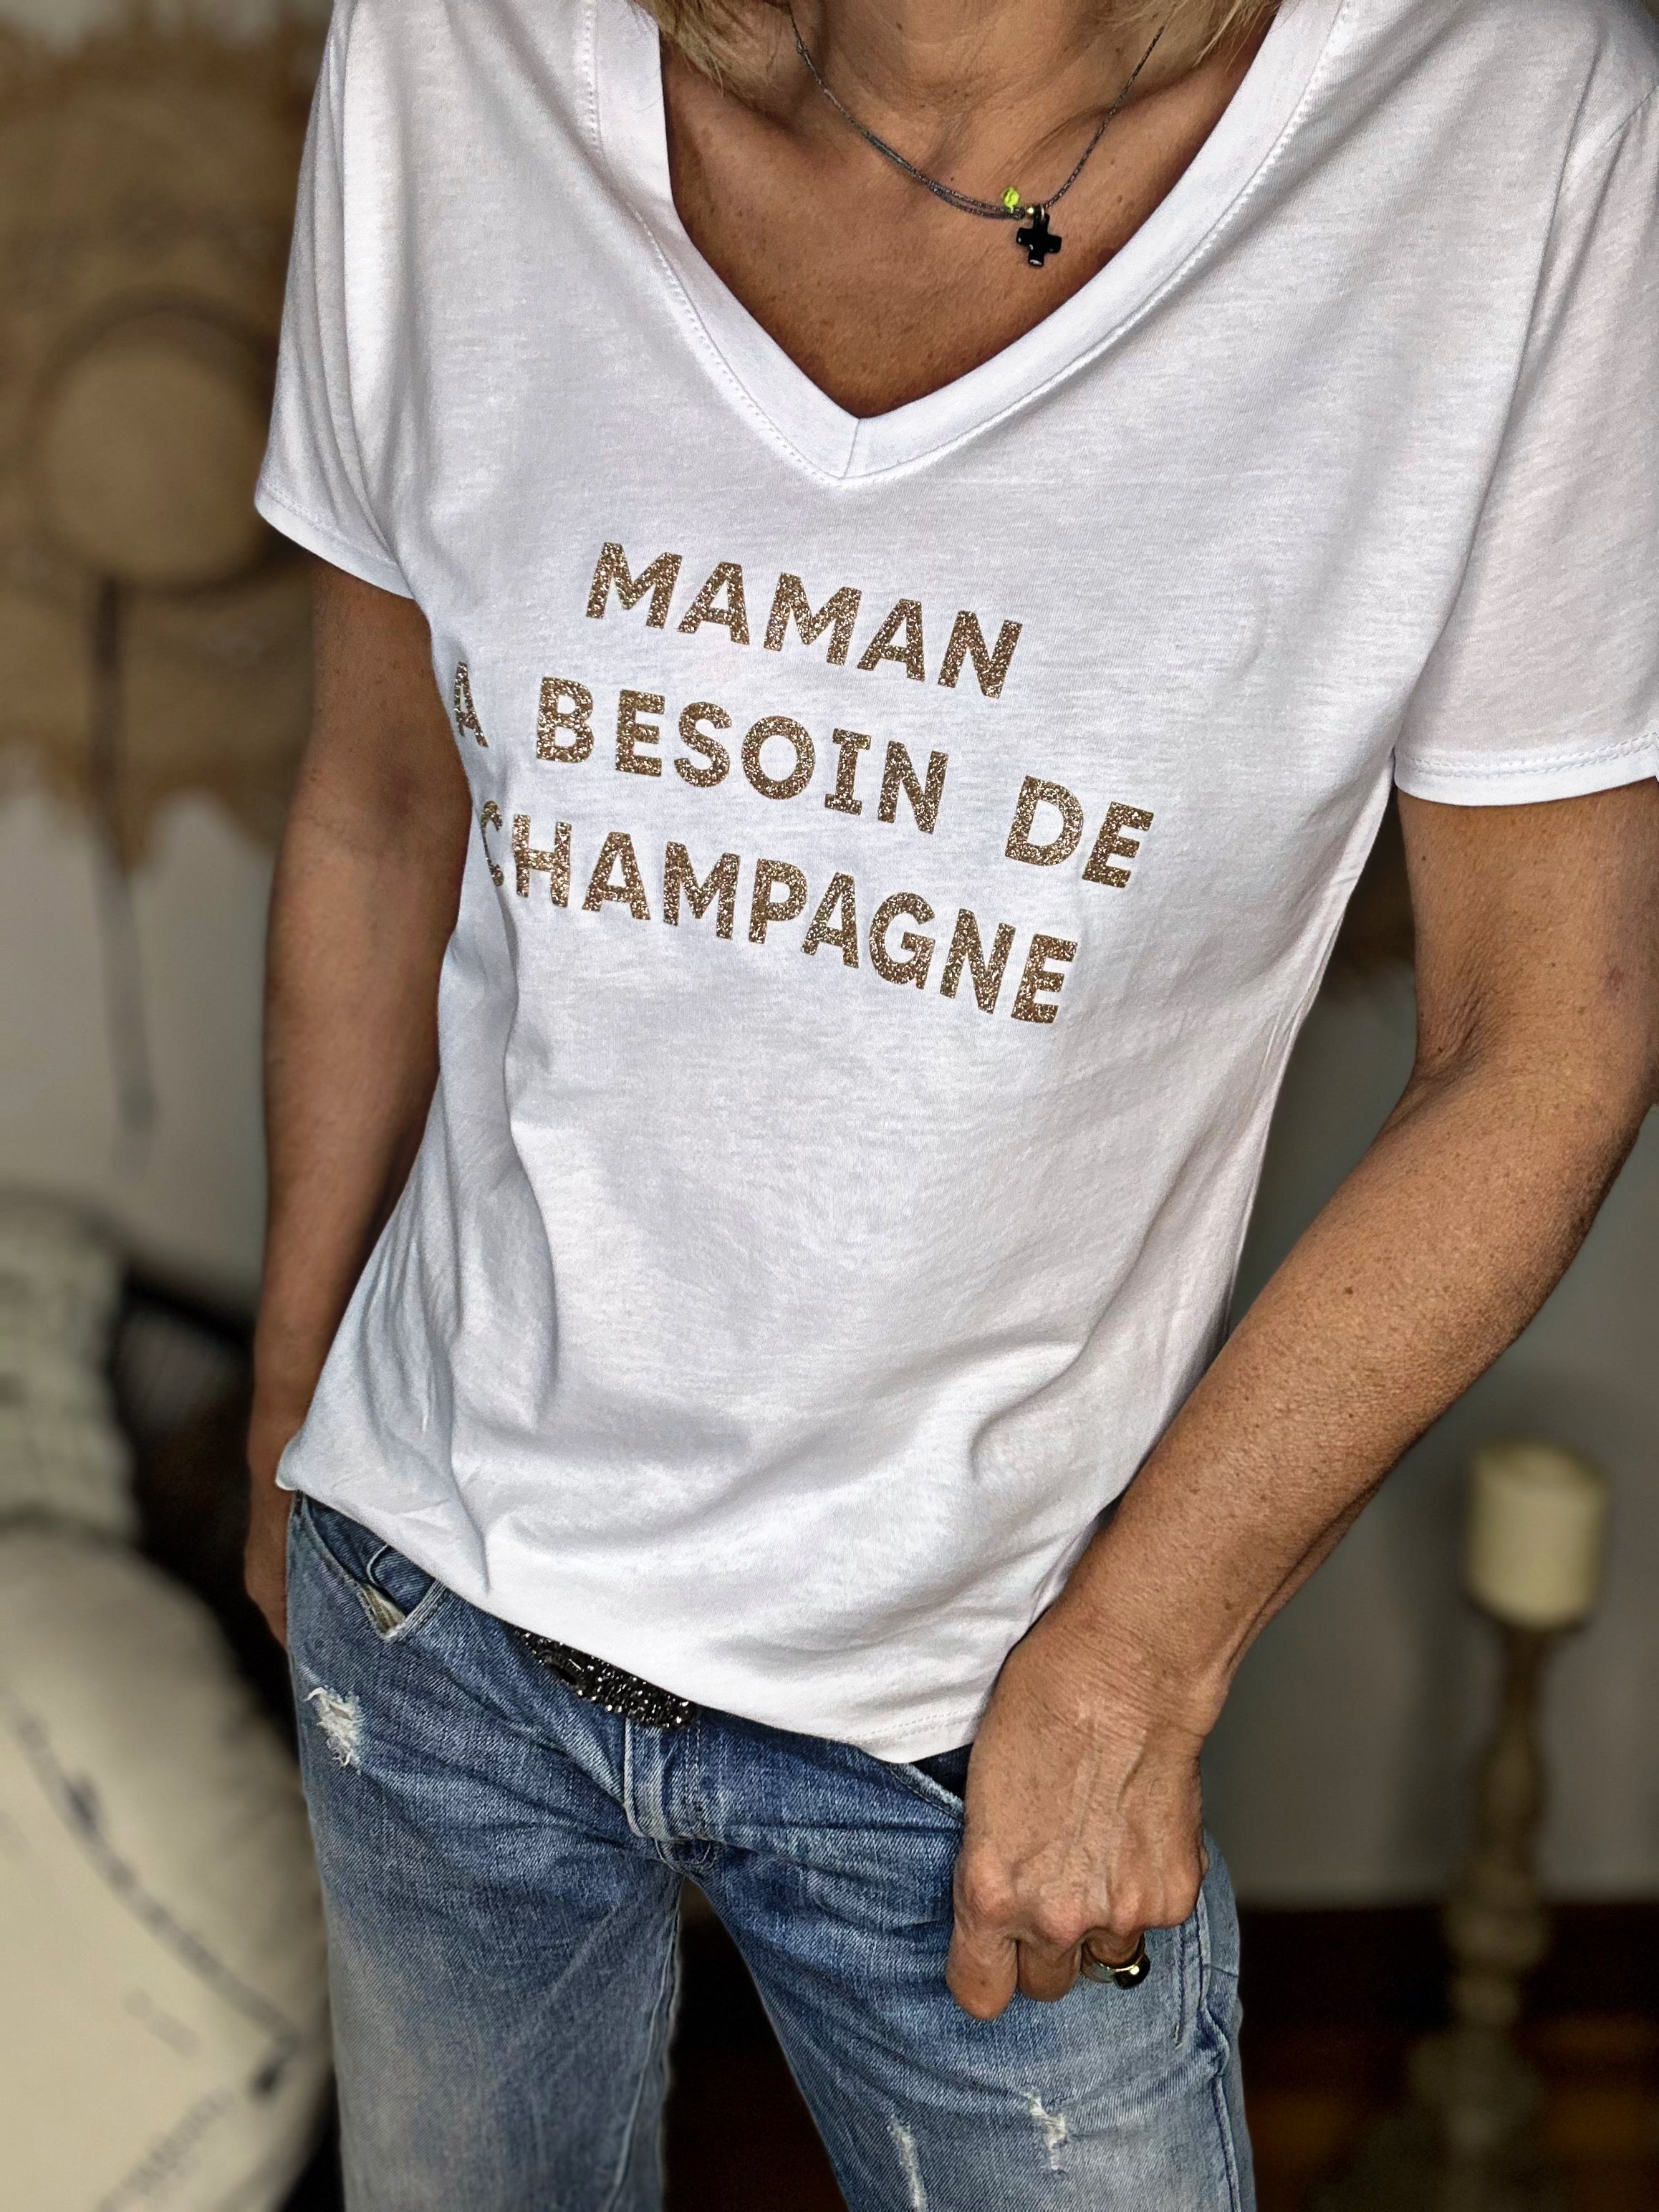 Tee shirt MAMAN A BESOIN DE CHAMPAGNE